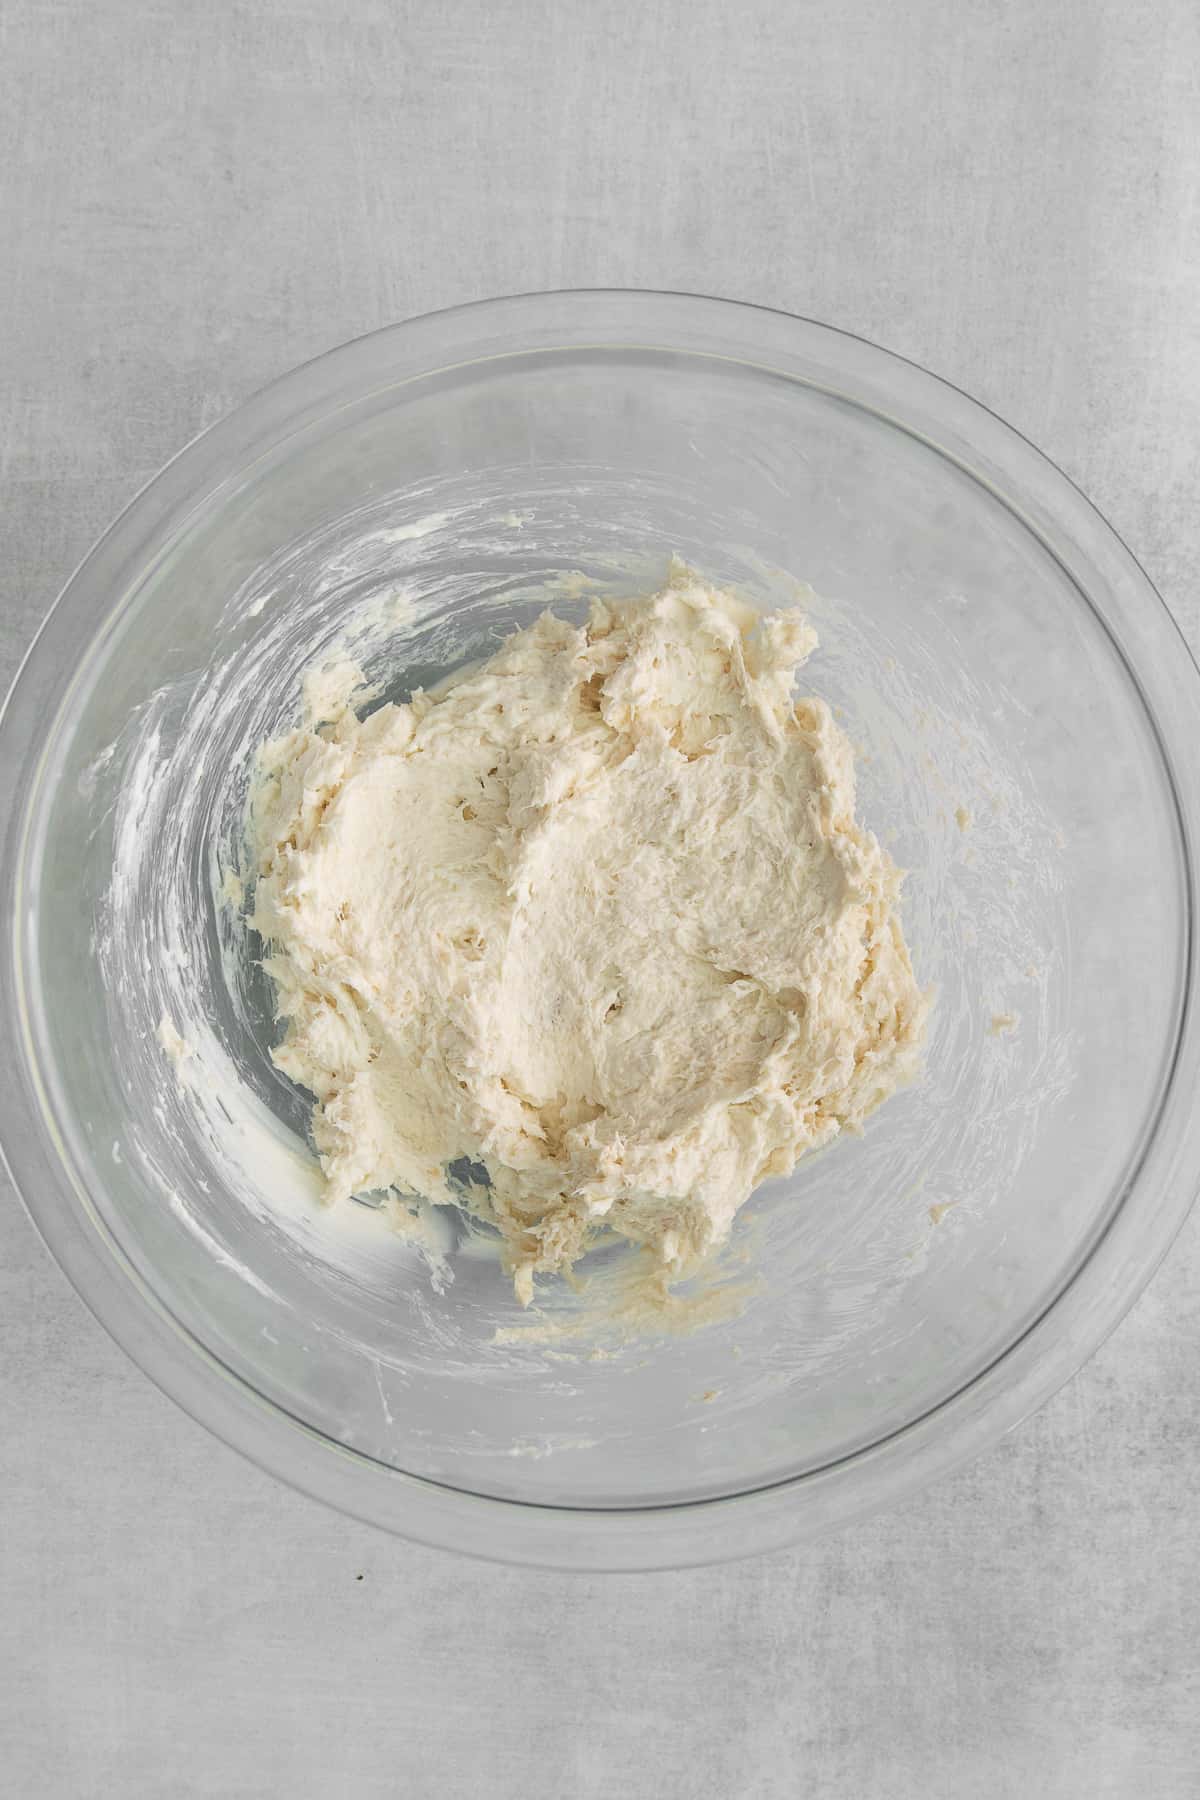 cream cheese rangoon filling in bowl.